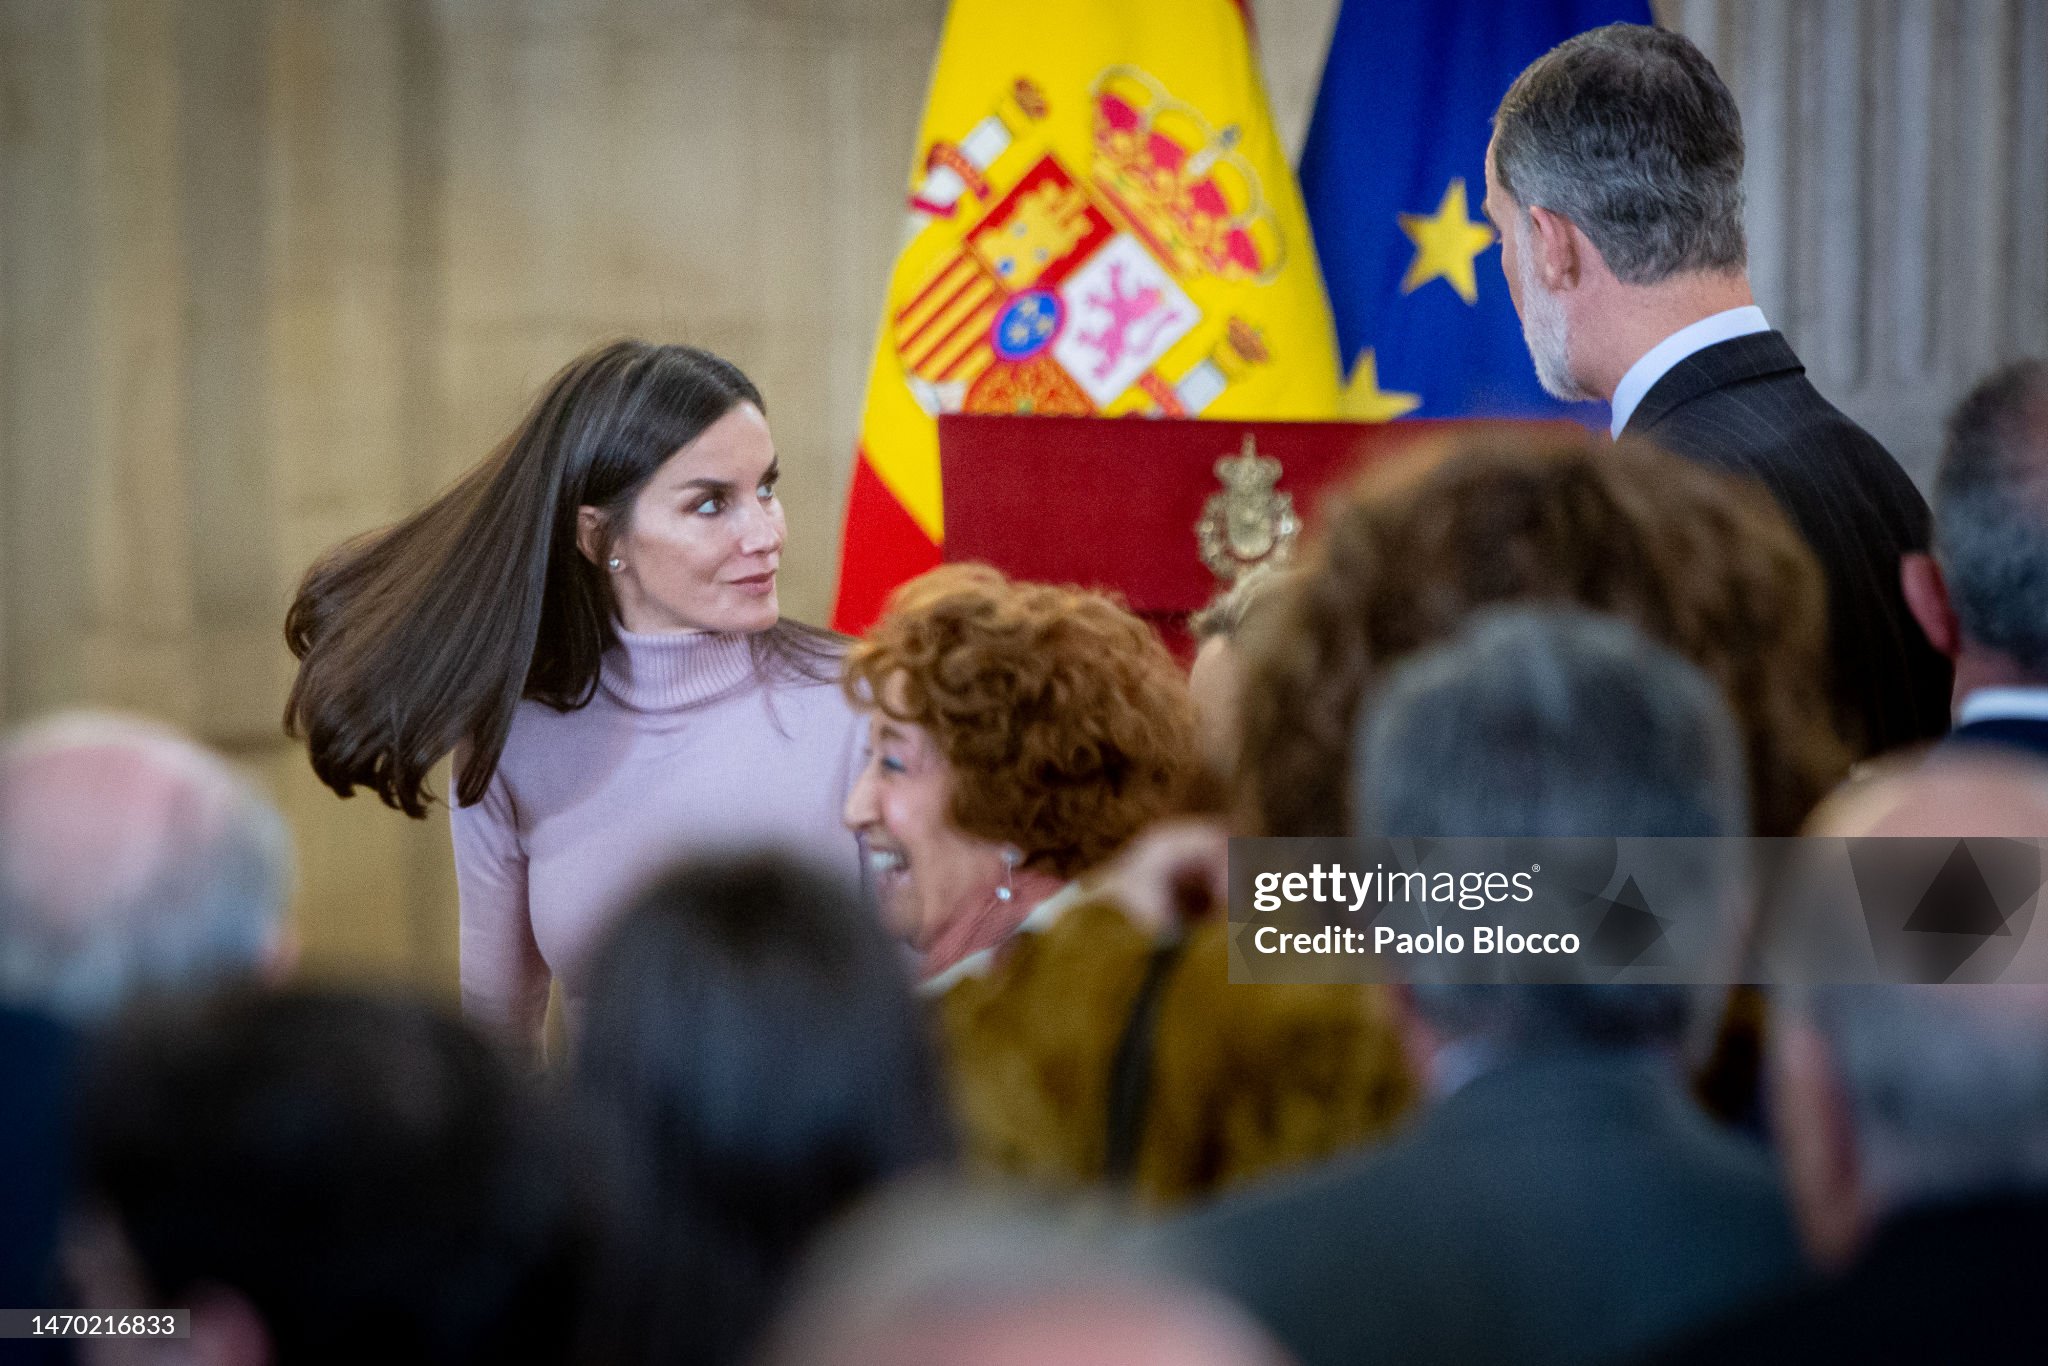 spanish-royals-attend-the-presentation-of-the-digital-portal-of-hispanic-history-in-madrid.jpg